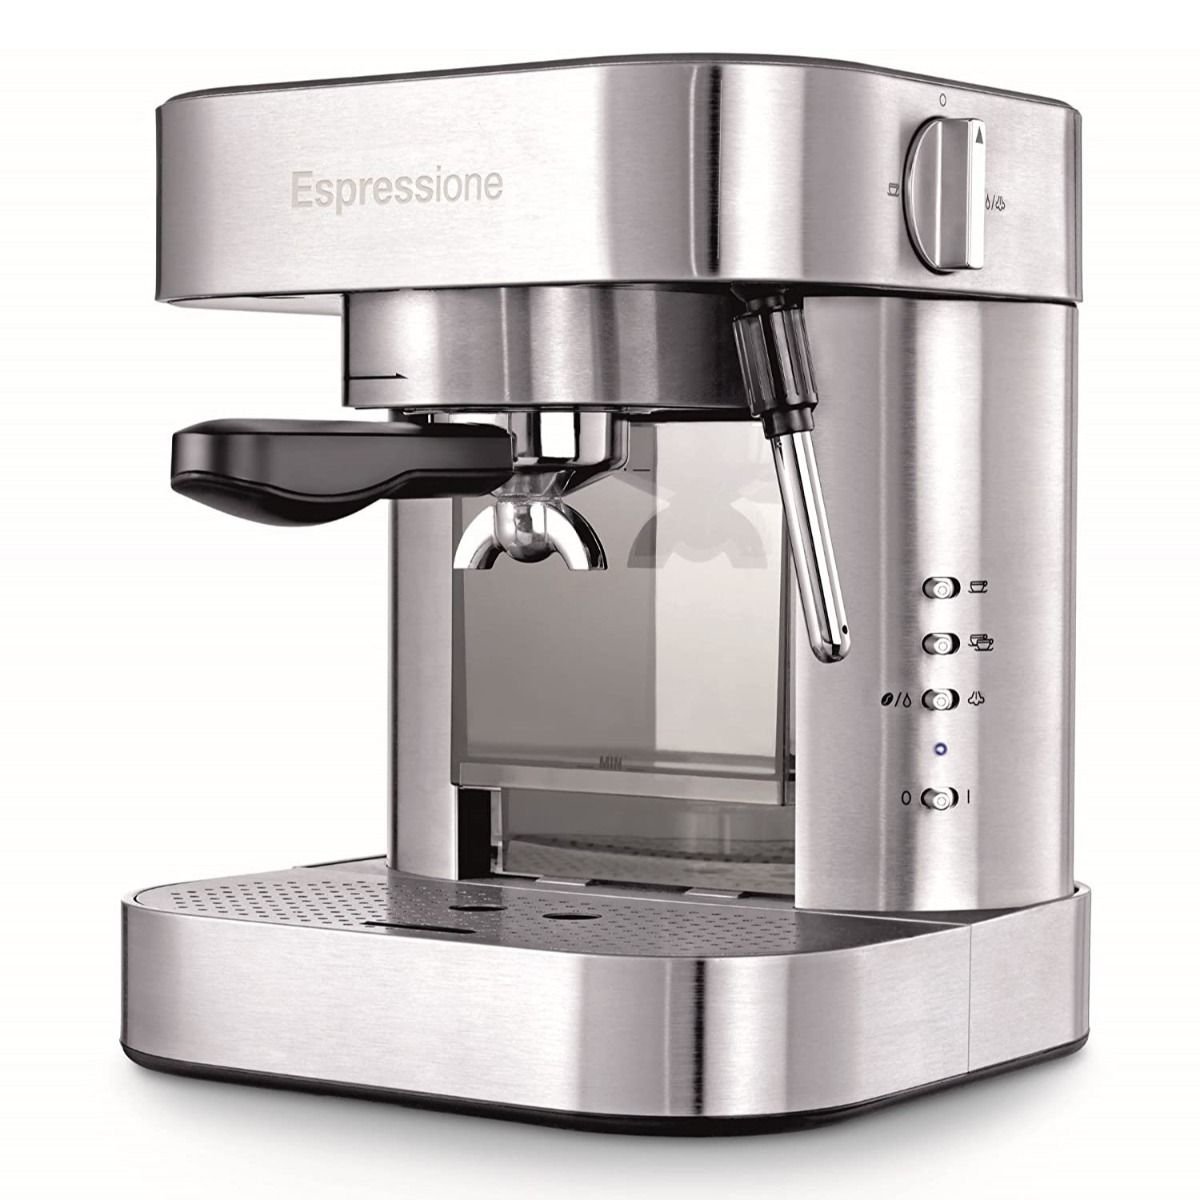 All-In-One Espresso Machine with Milk Steamer - 10 Pc Set, 1250W